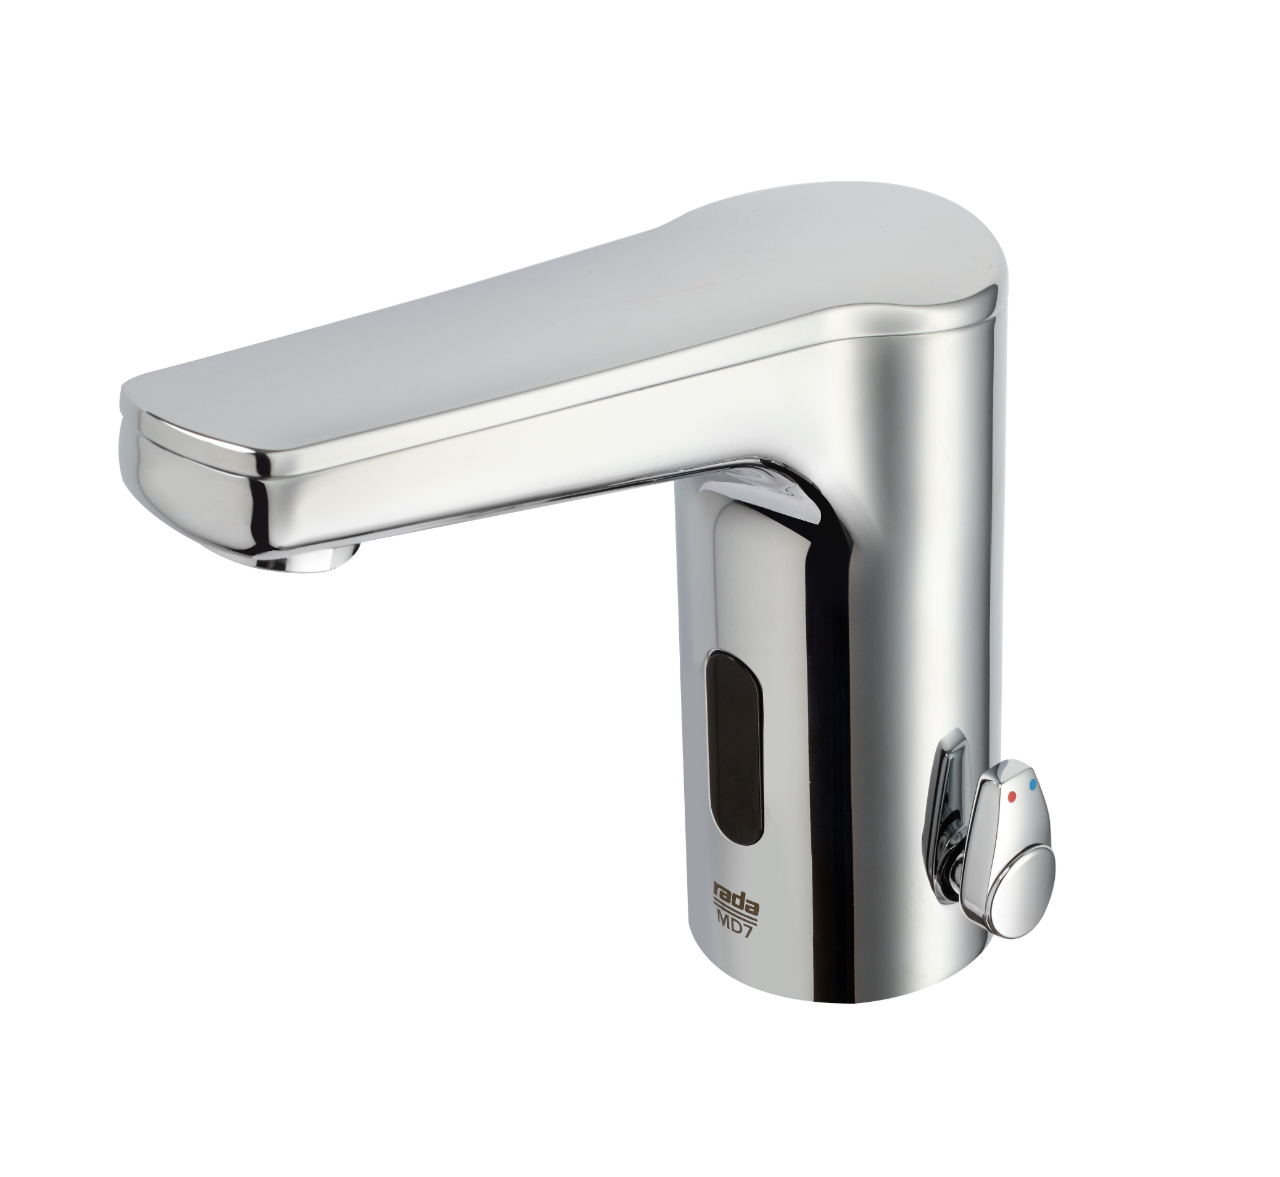 Product photo for Rada MD7 washbasin sensor tap